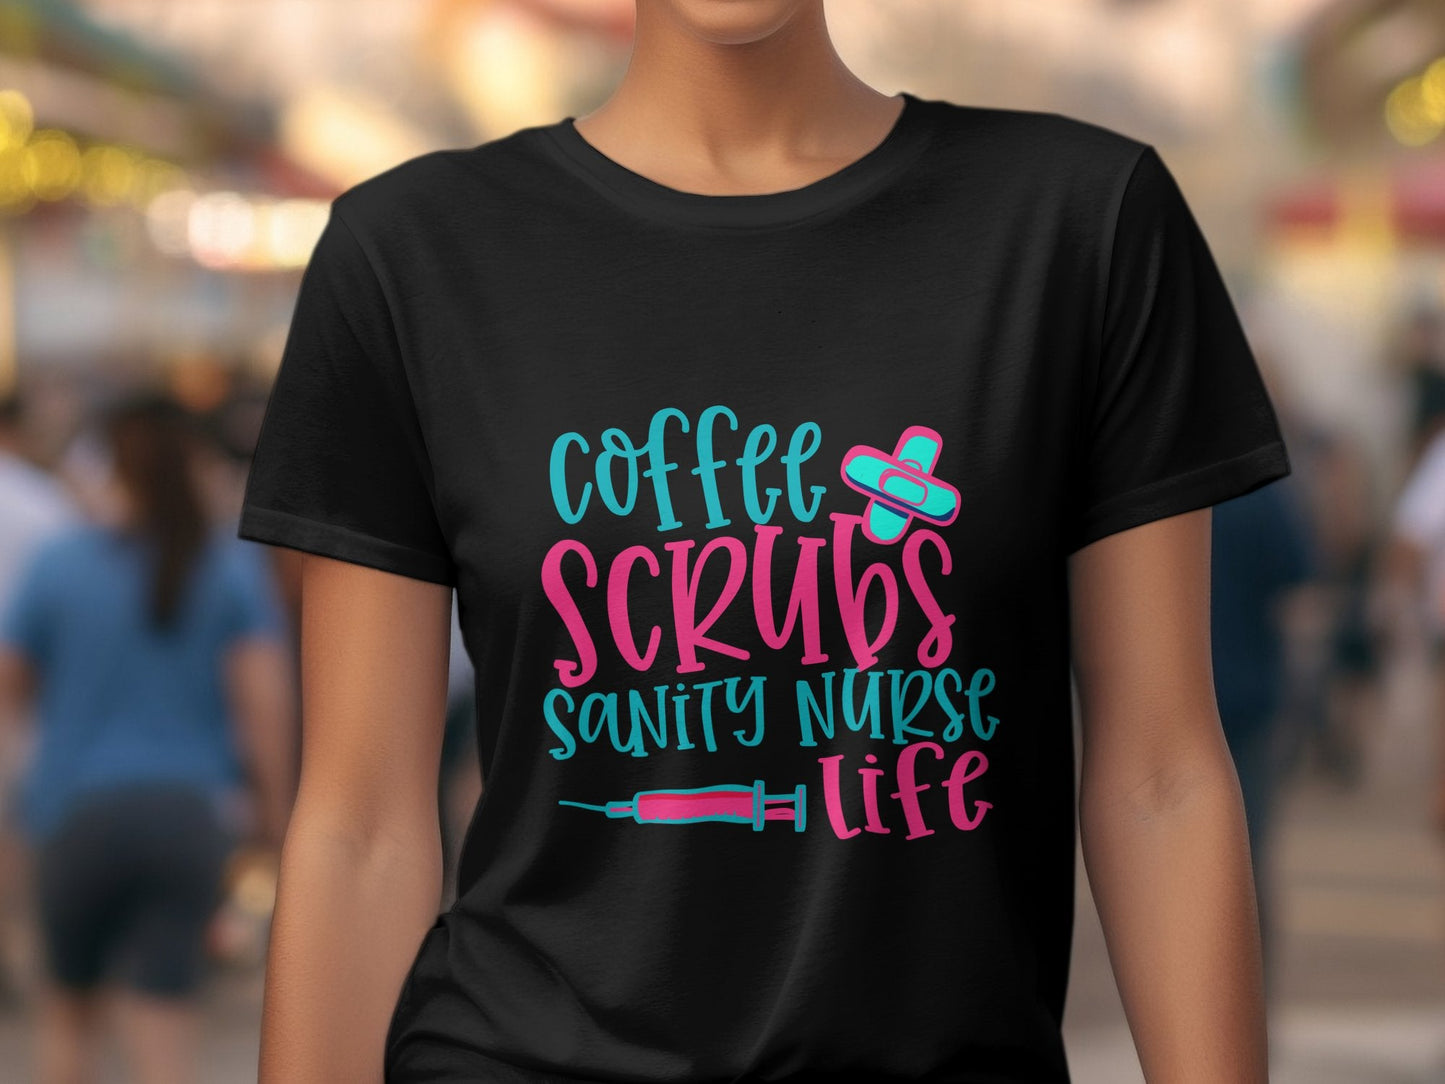 Coffee scrubs sanity nurse life working Women's tee - Premium t-shirt from MyDesigns - Just $19.95! Shop now at Lees Krazy Teez